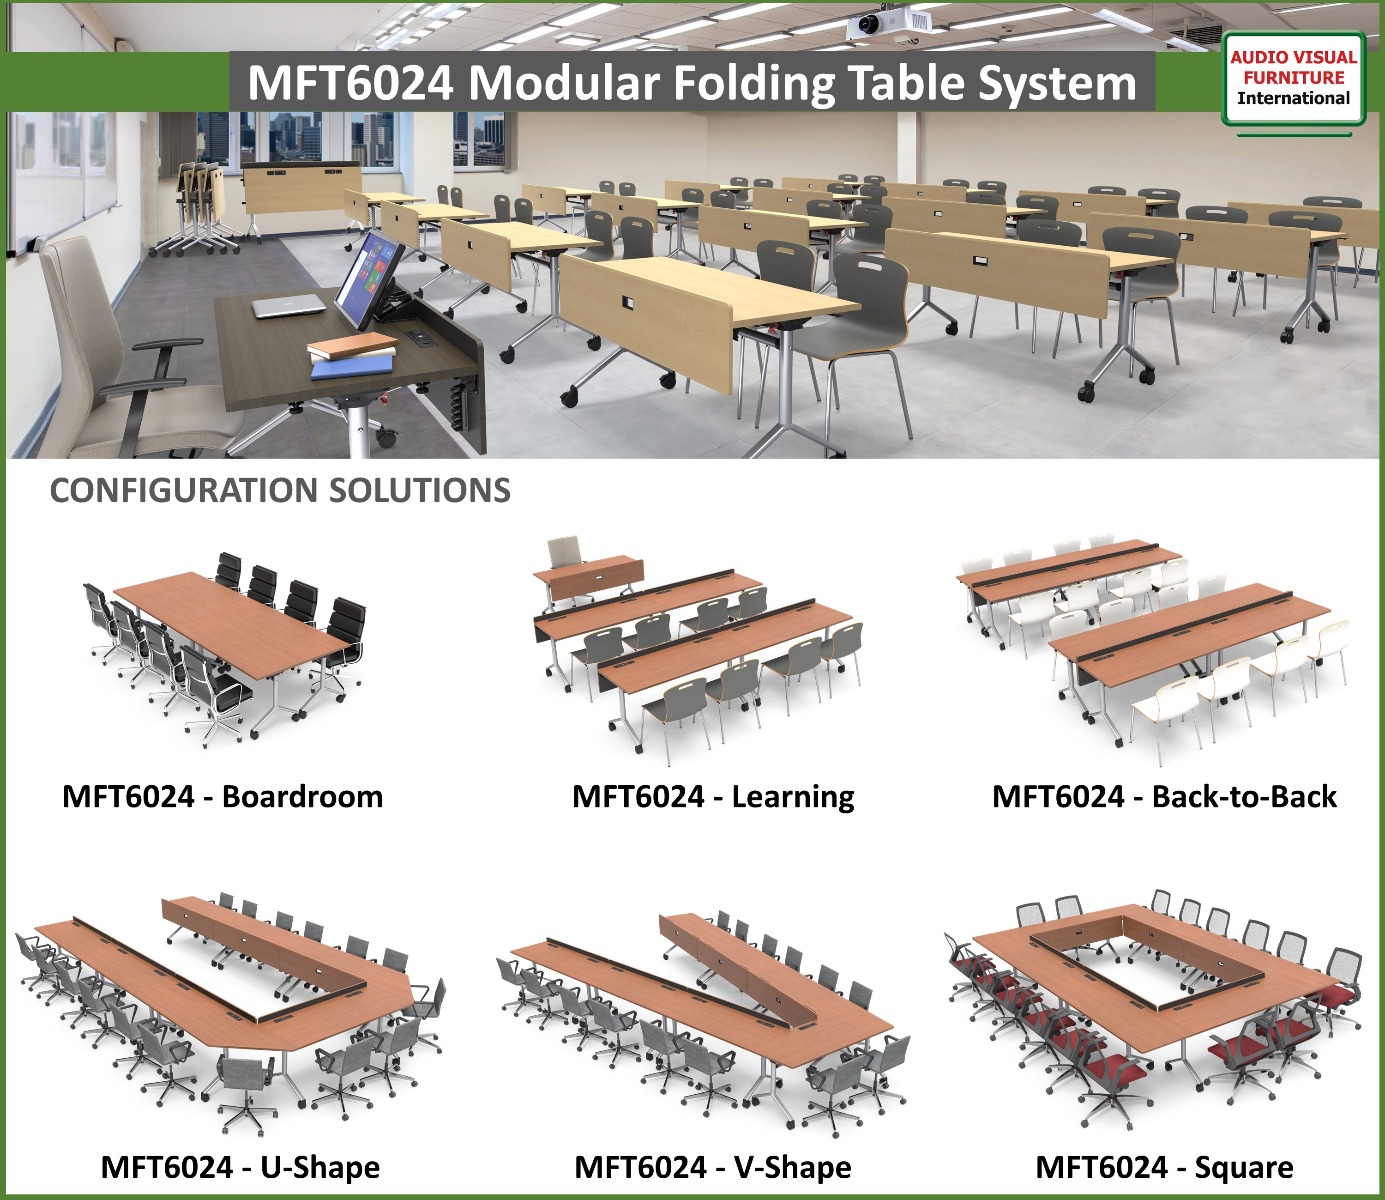 MFT6024 Modular Folding Table System